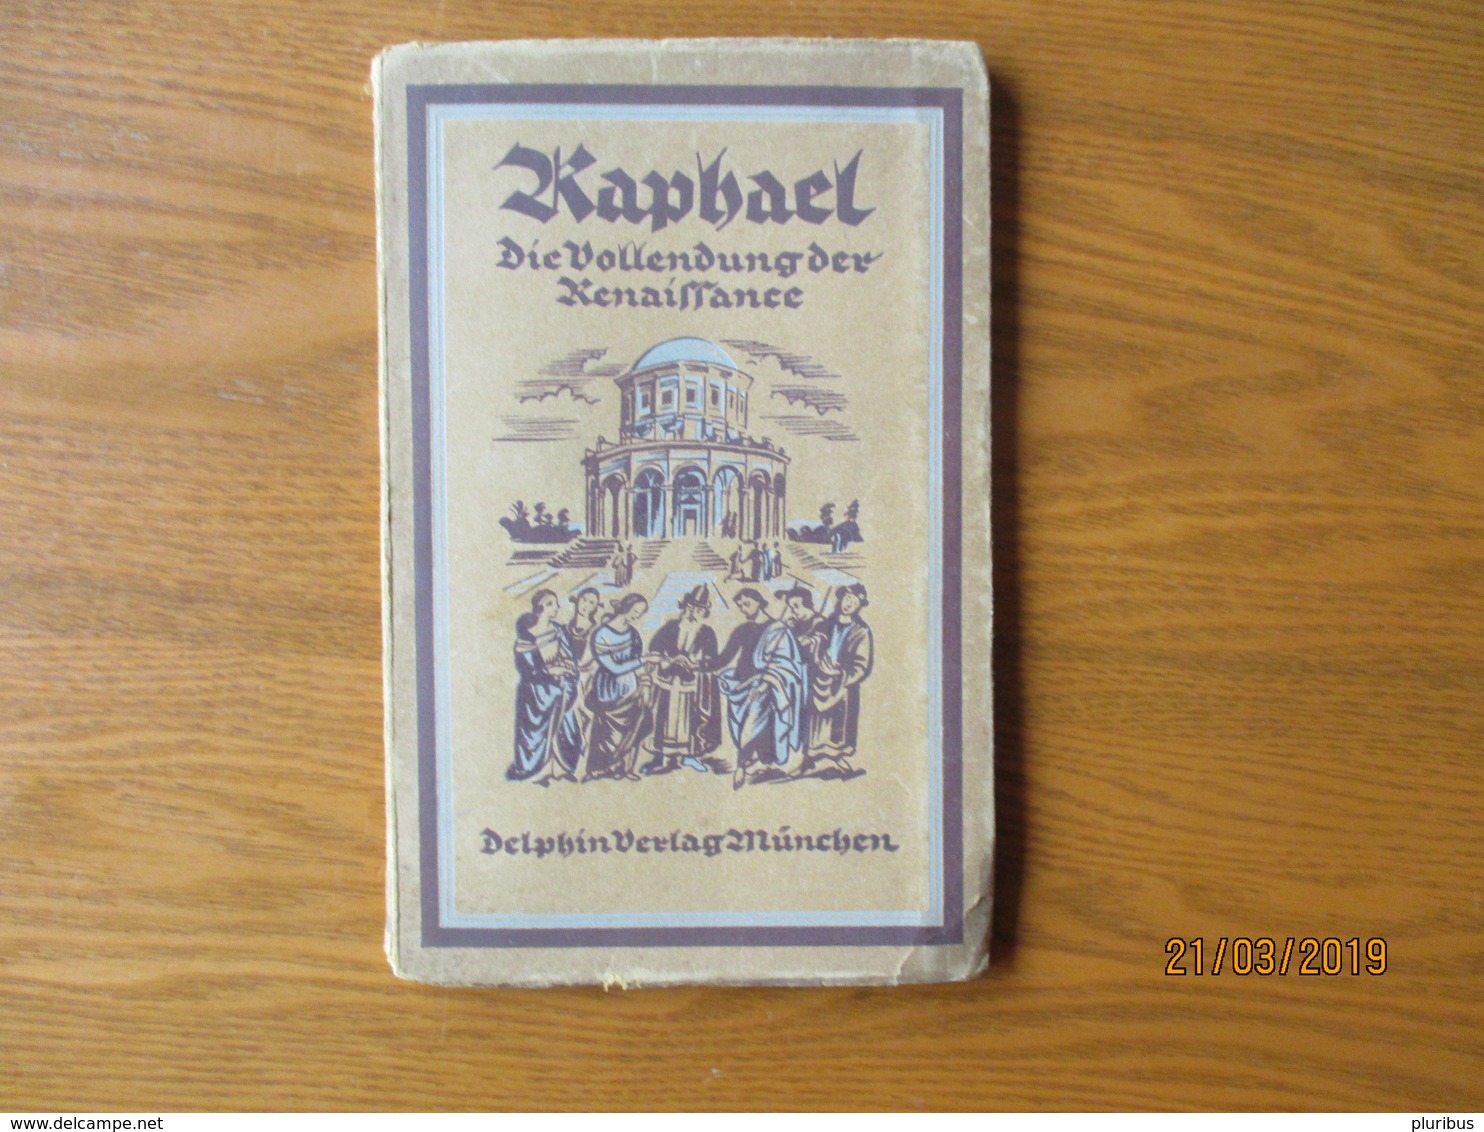 1924 RAPHAEL , DIE VOLLENDUNG DER RENAISSANCE ,  NUDE ART , OLD BOOK ,0 - Peinture & Sculpture